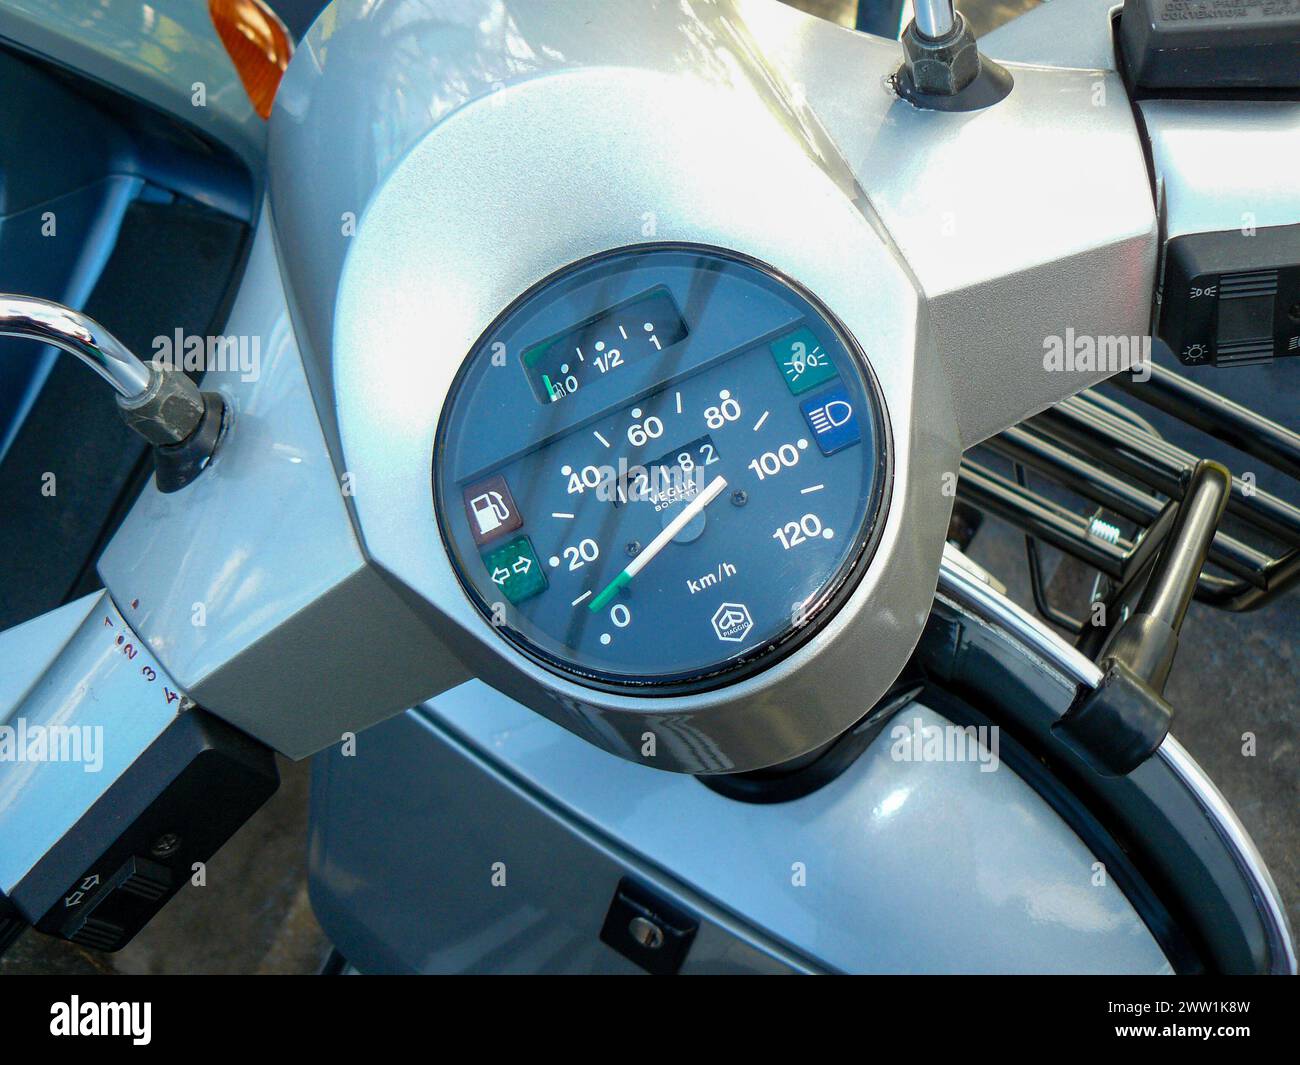 Piaggio Vespa PK PX 150 speedometer detail Stock Photo